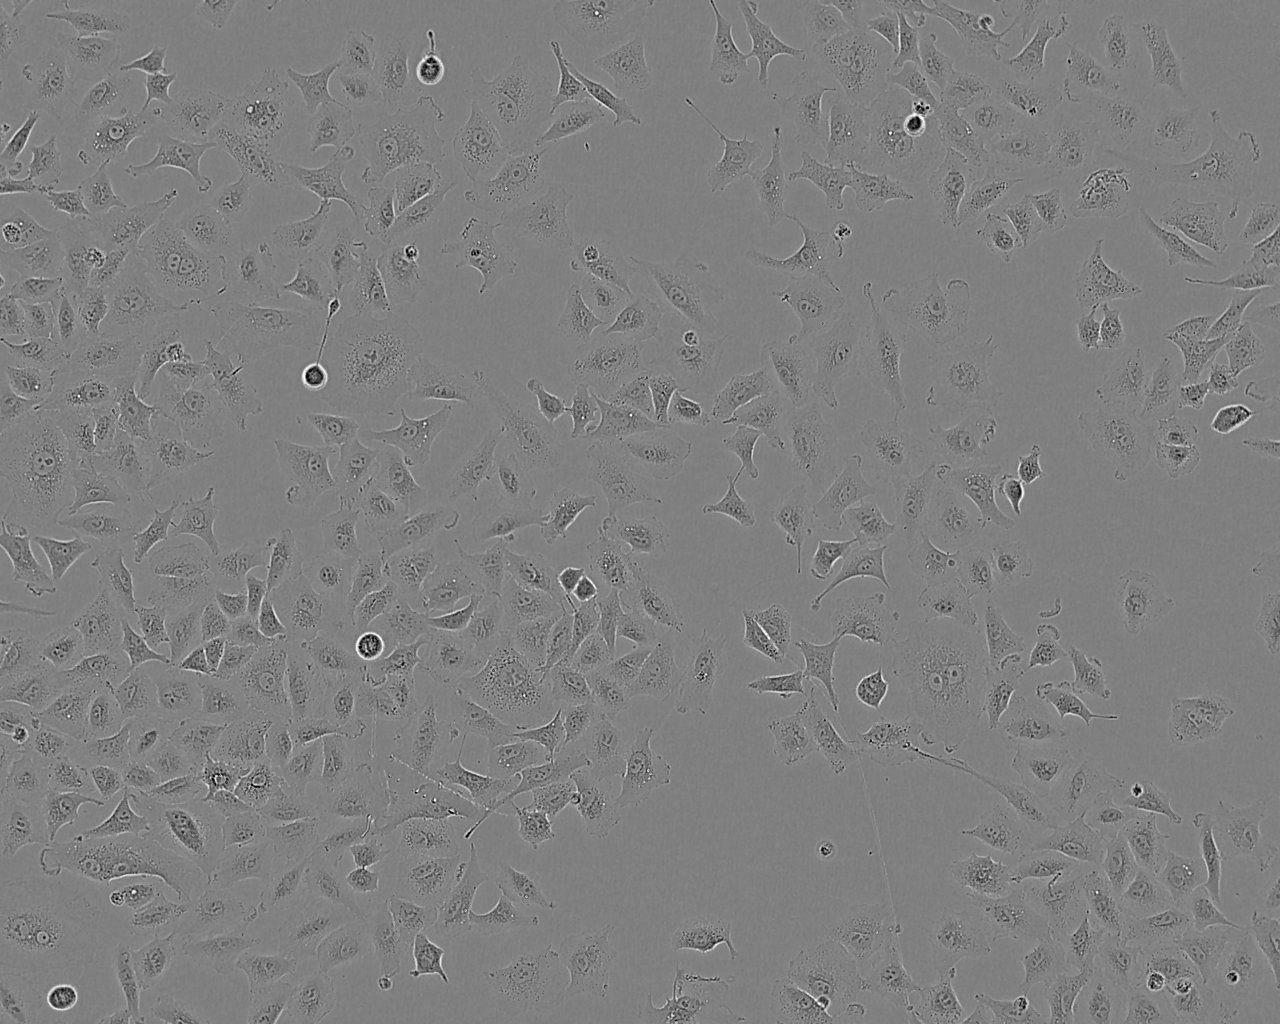 SK-N-FI epithelioid cells人脑神经母细胞瘤细胞系,SK-N-FI epithelioid cells